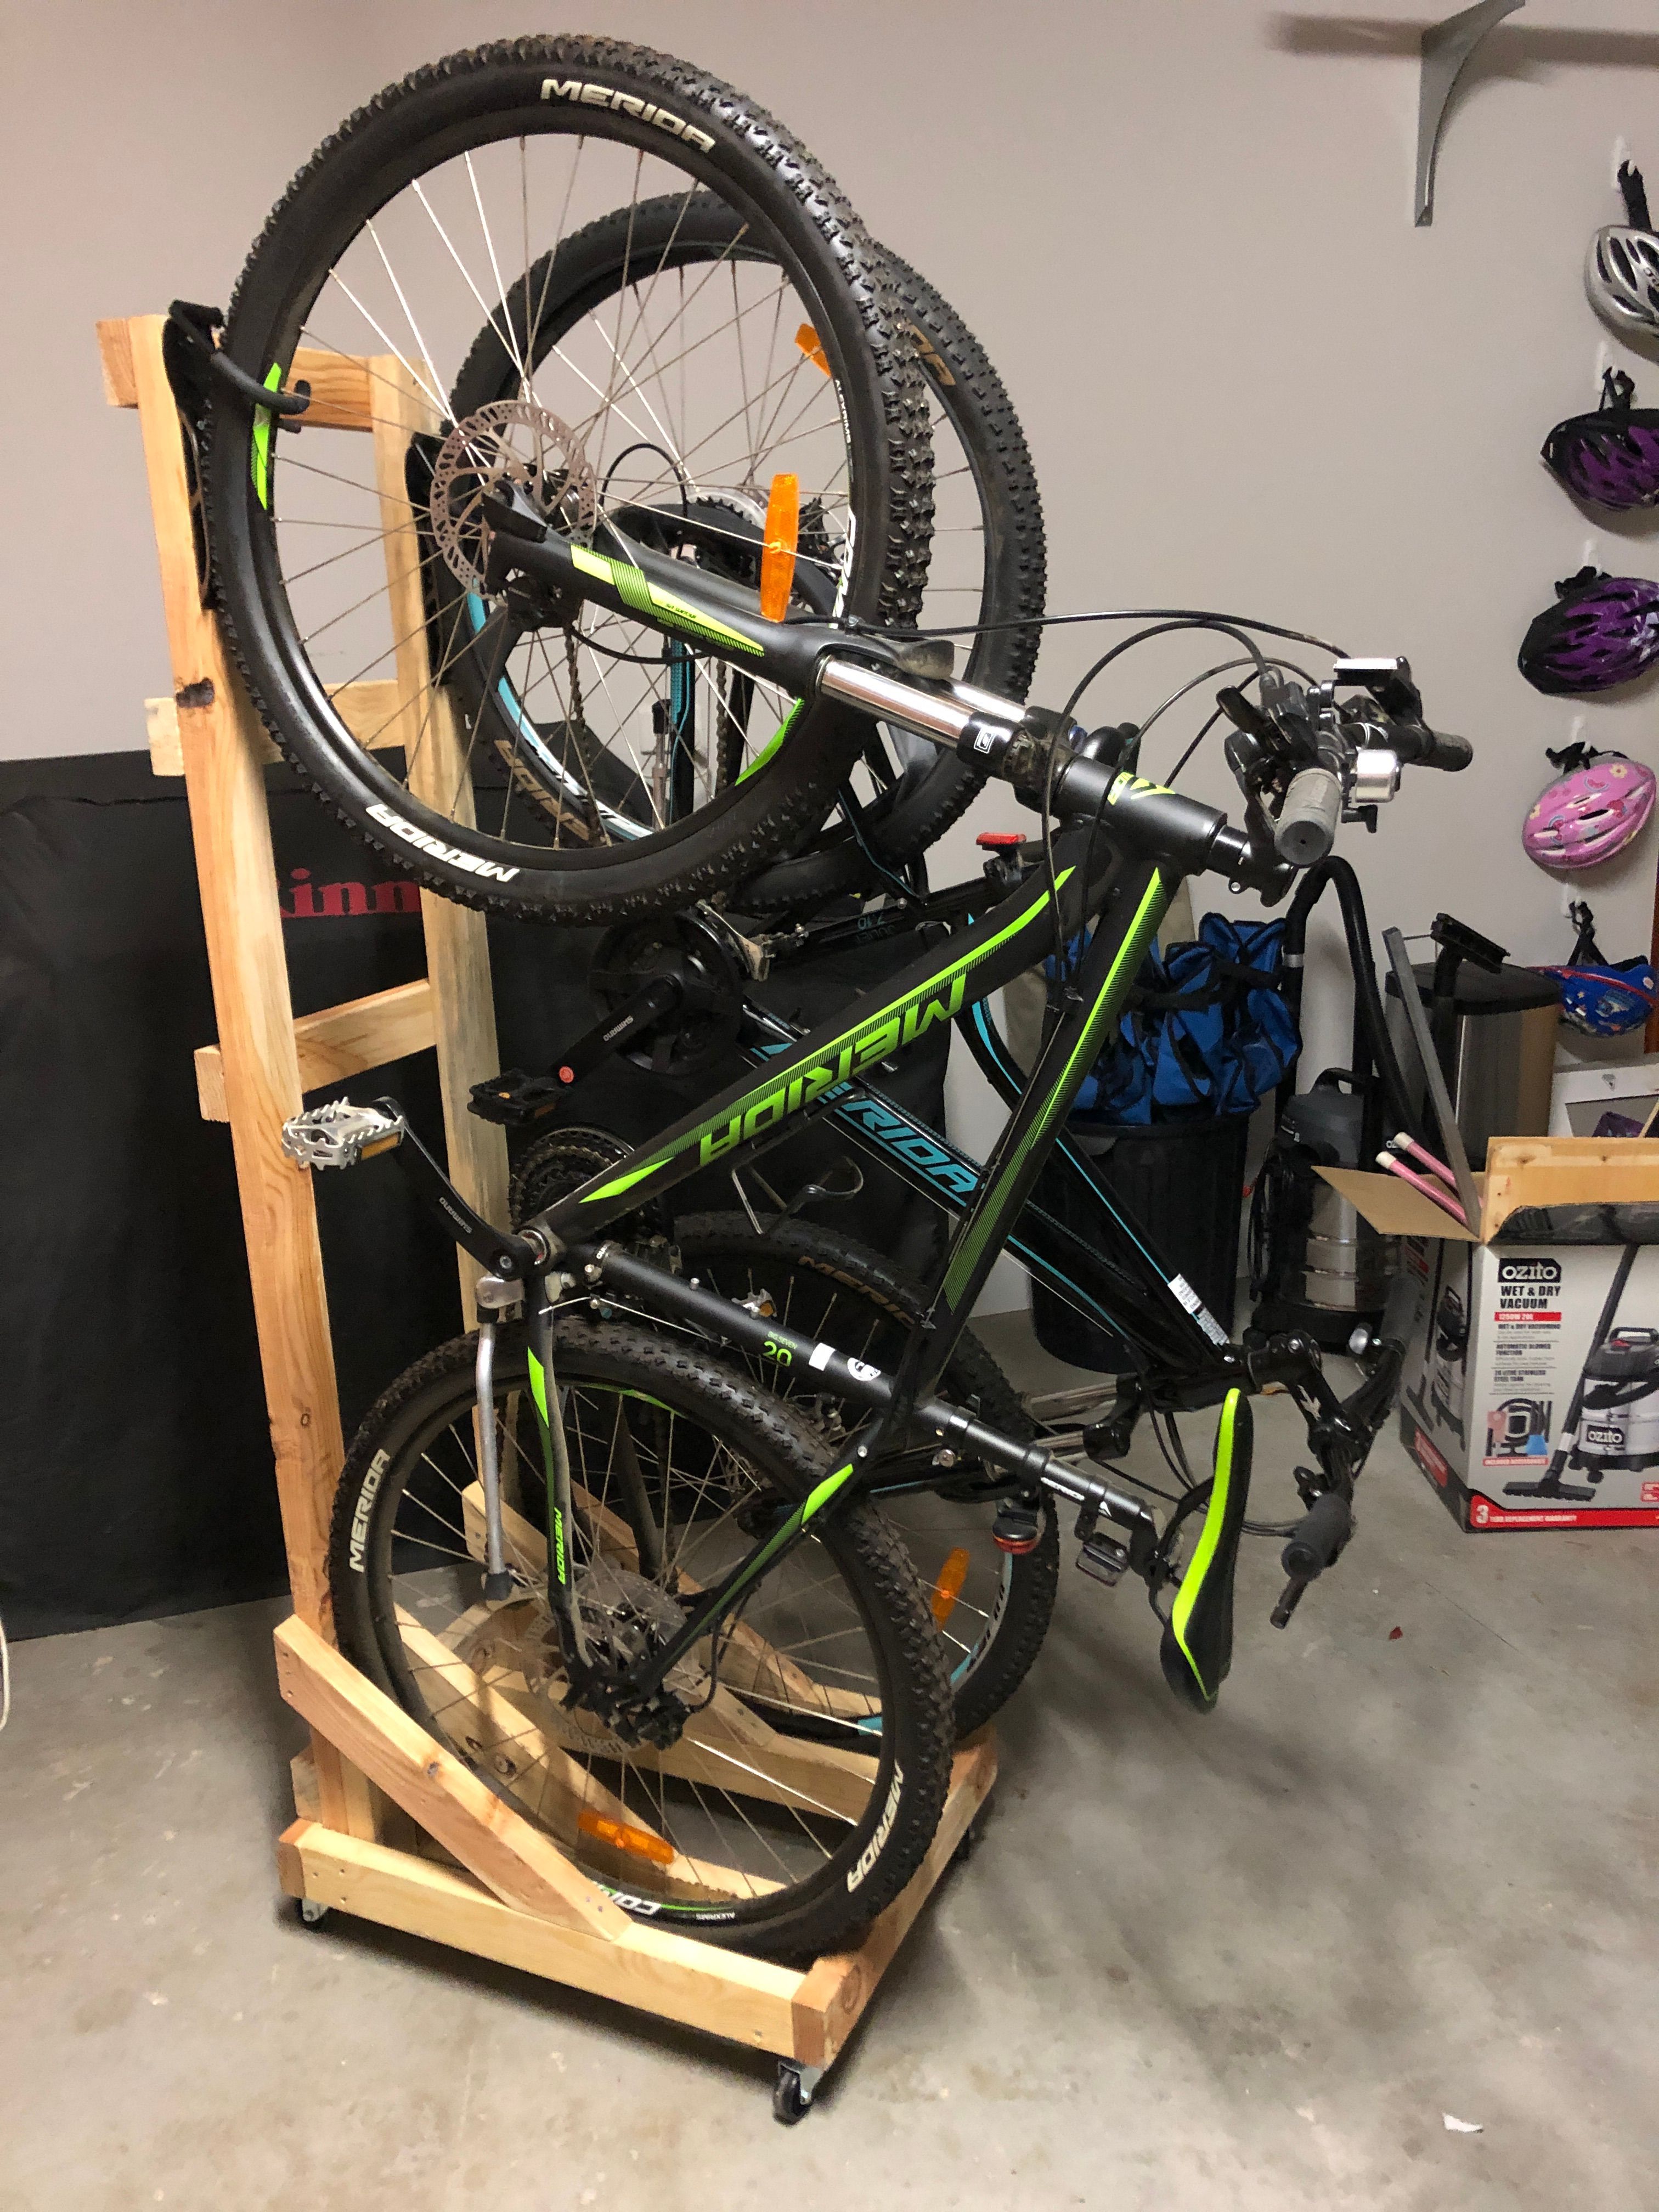 D.I.Y. portable bike stand | Bunnings Workshop community